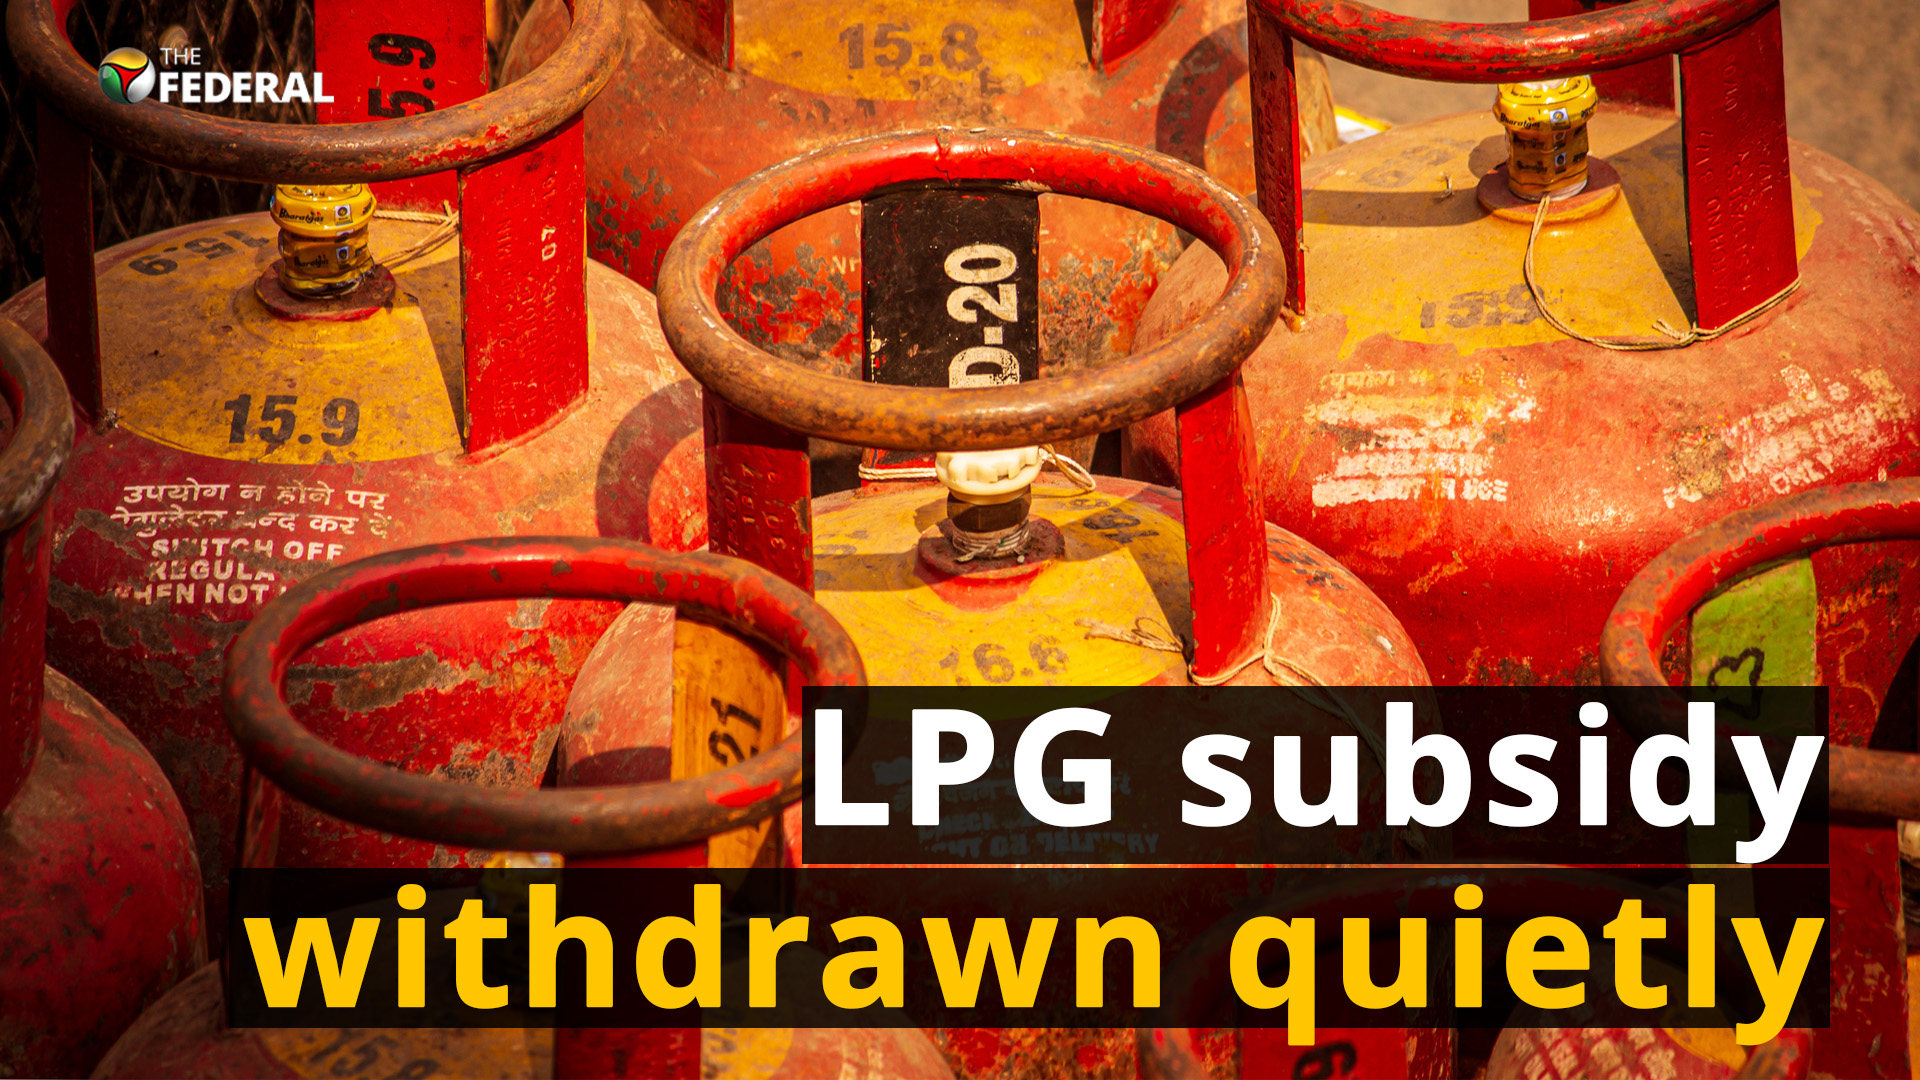 Where did your LPG subsidy vanish?